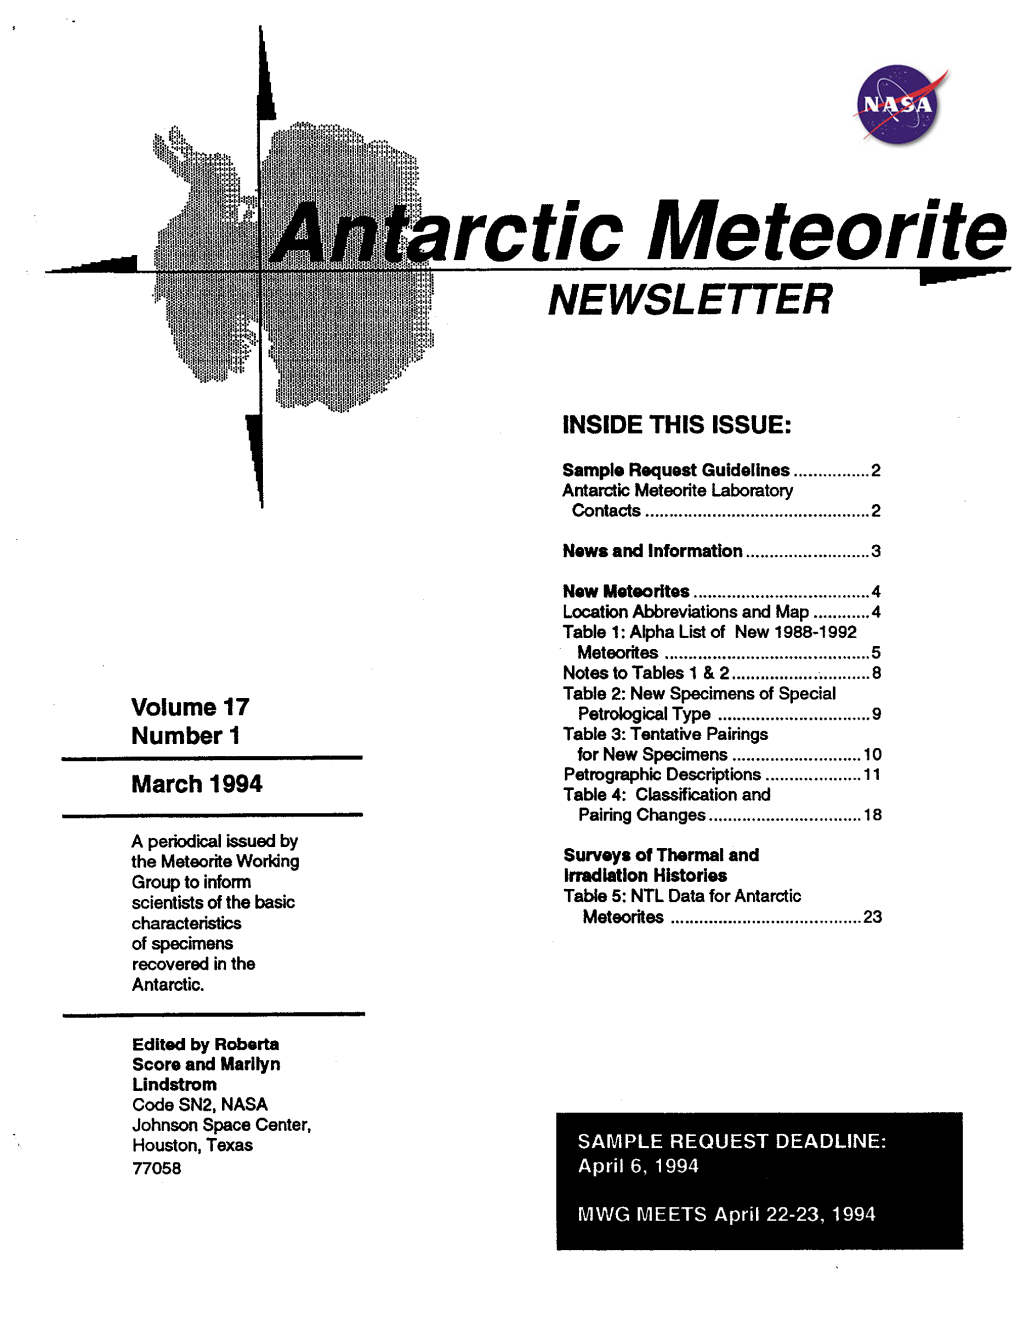 Antartic Meterorite Newsletter Vol 17 Number 1